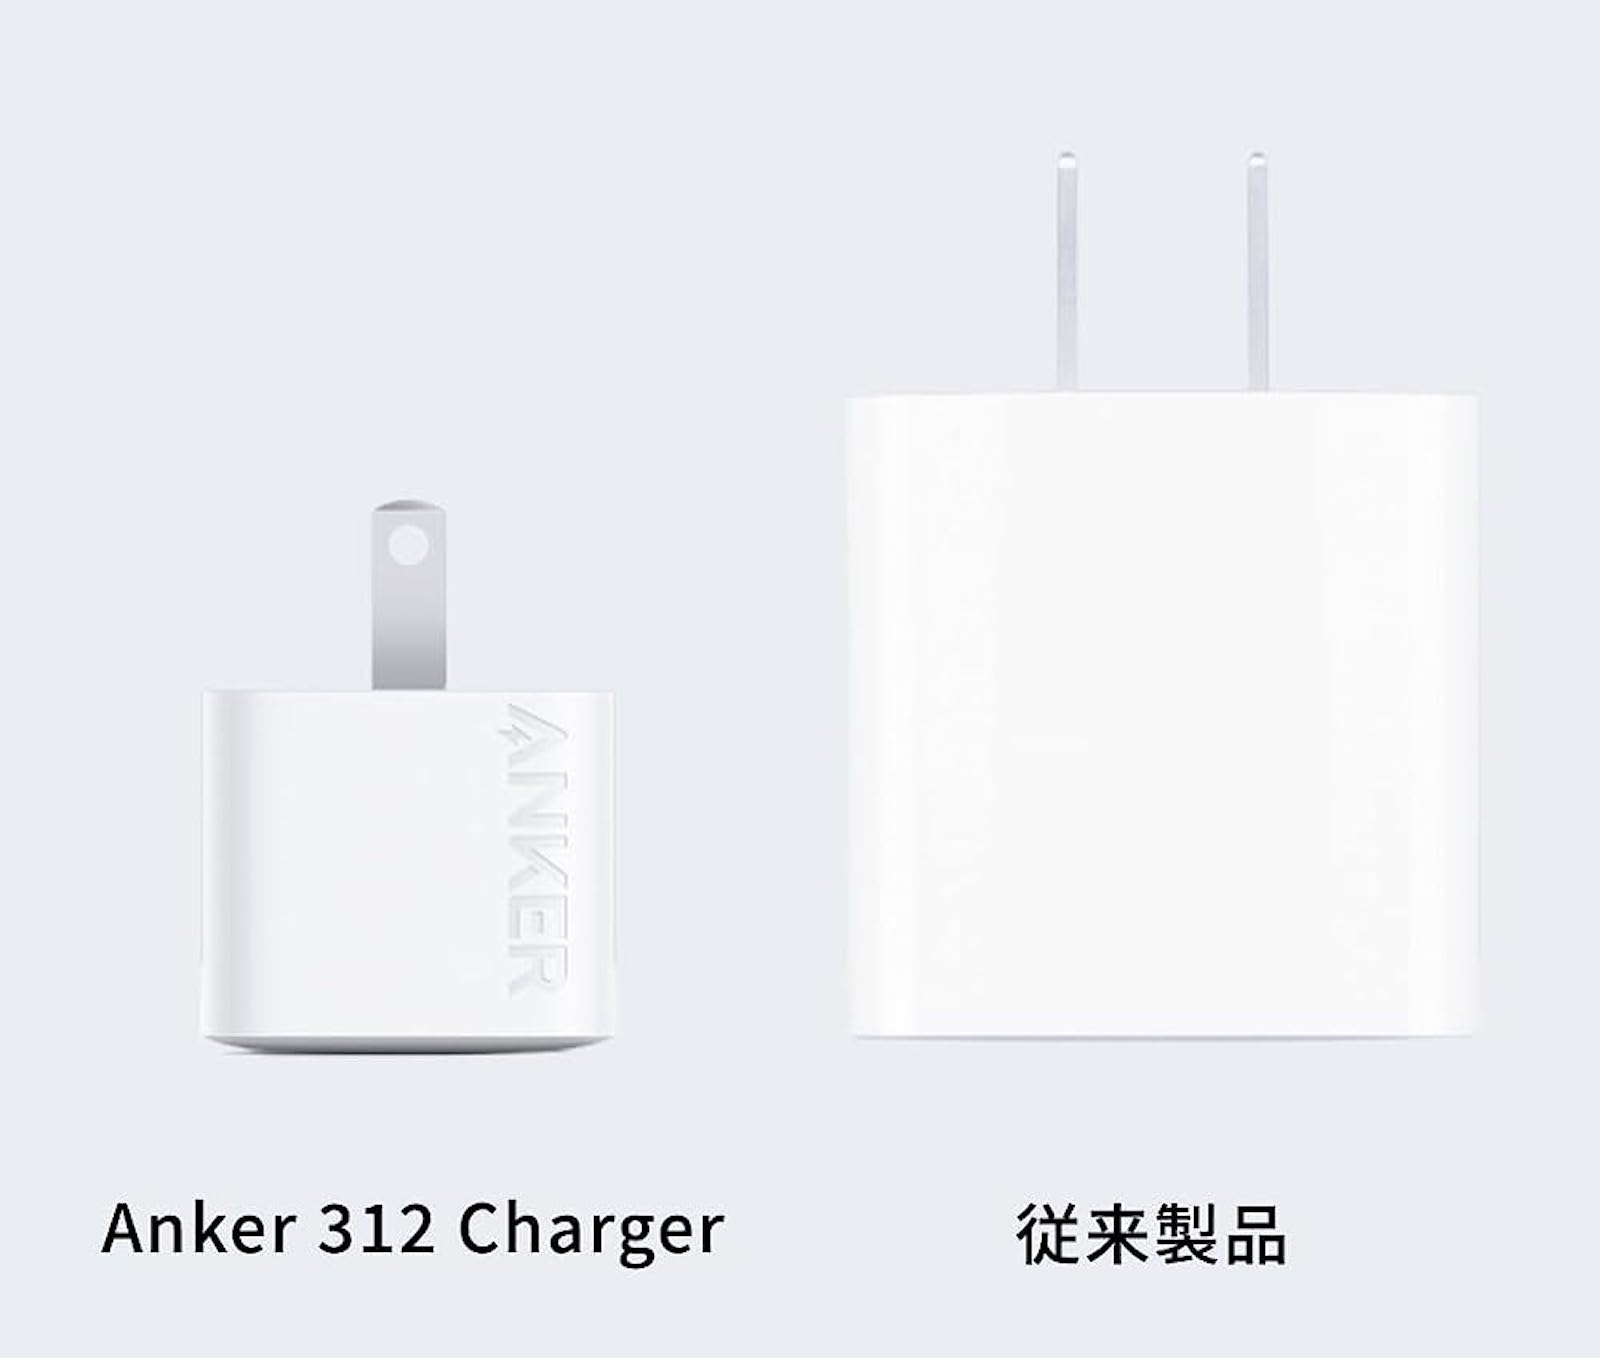 Anker 312 charger comparison